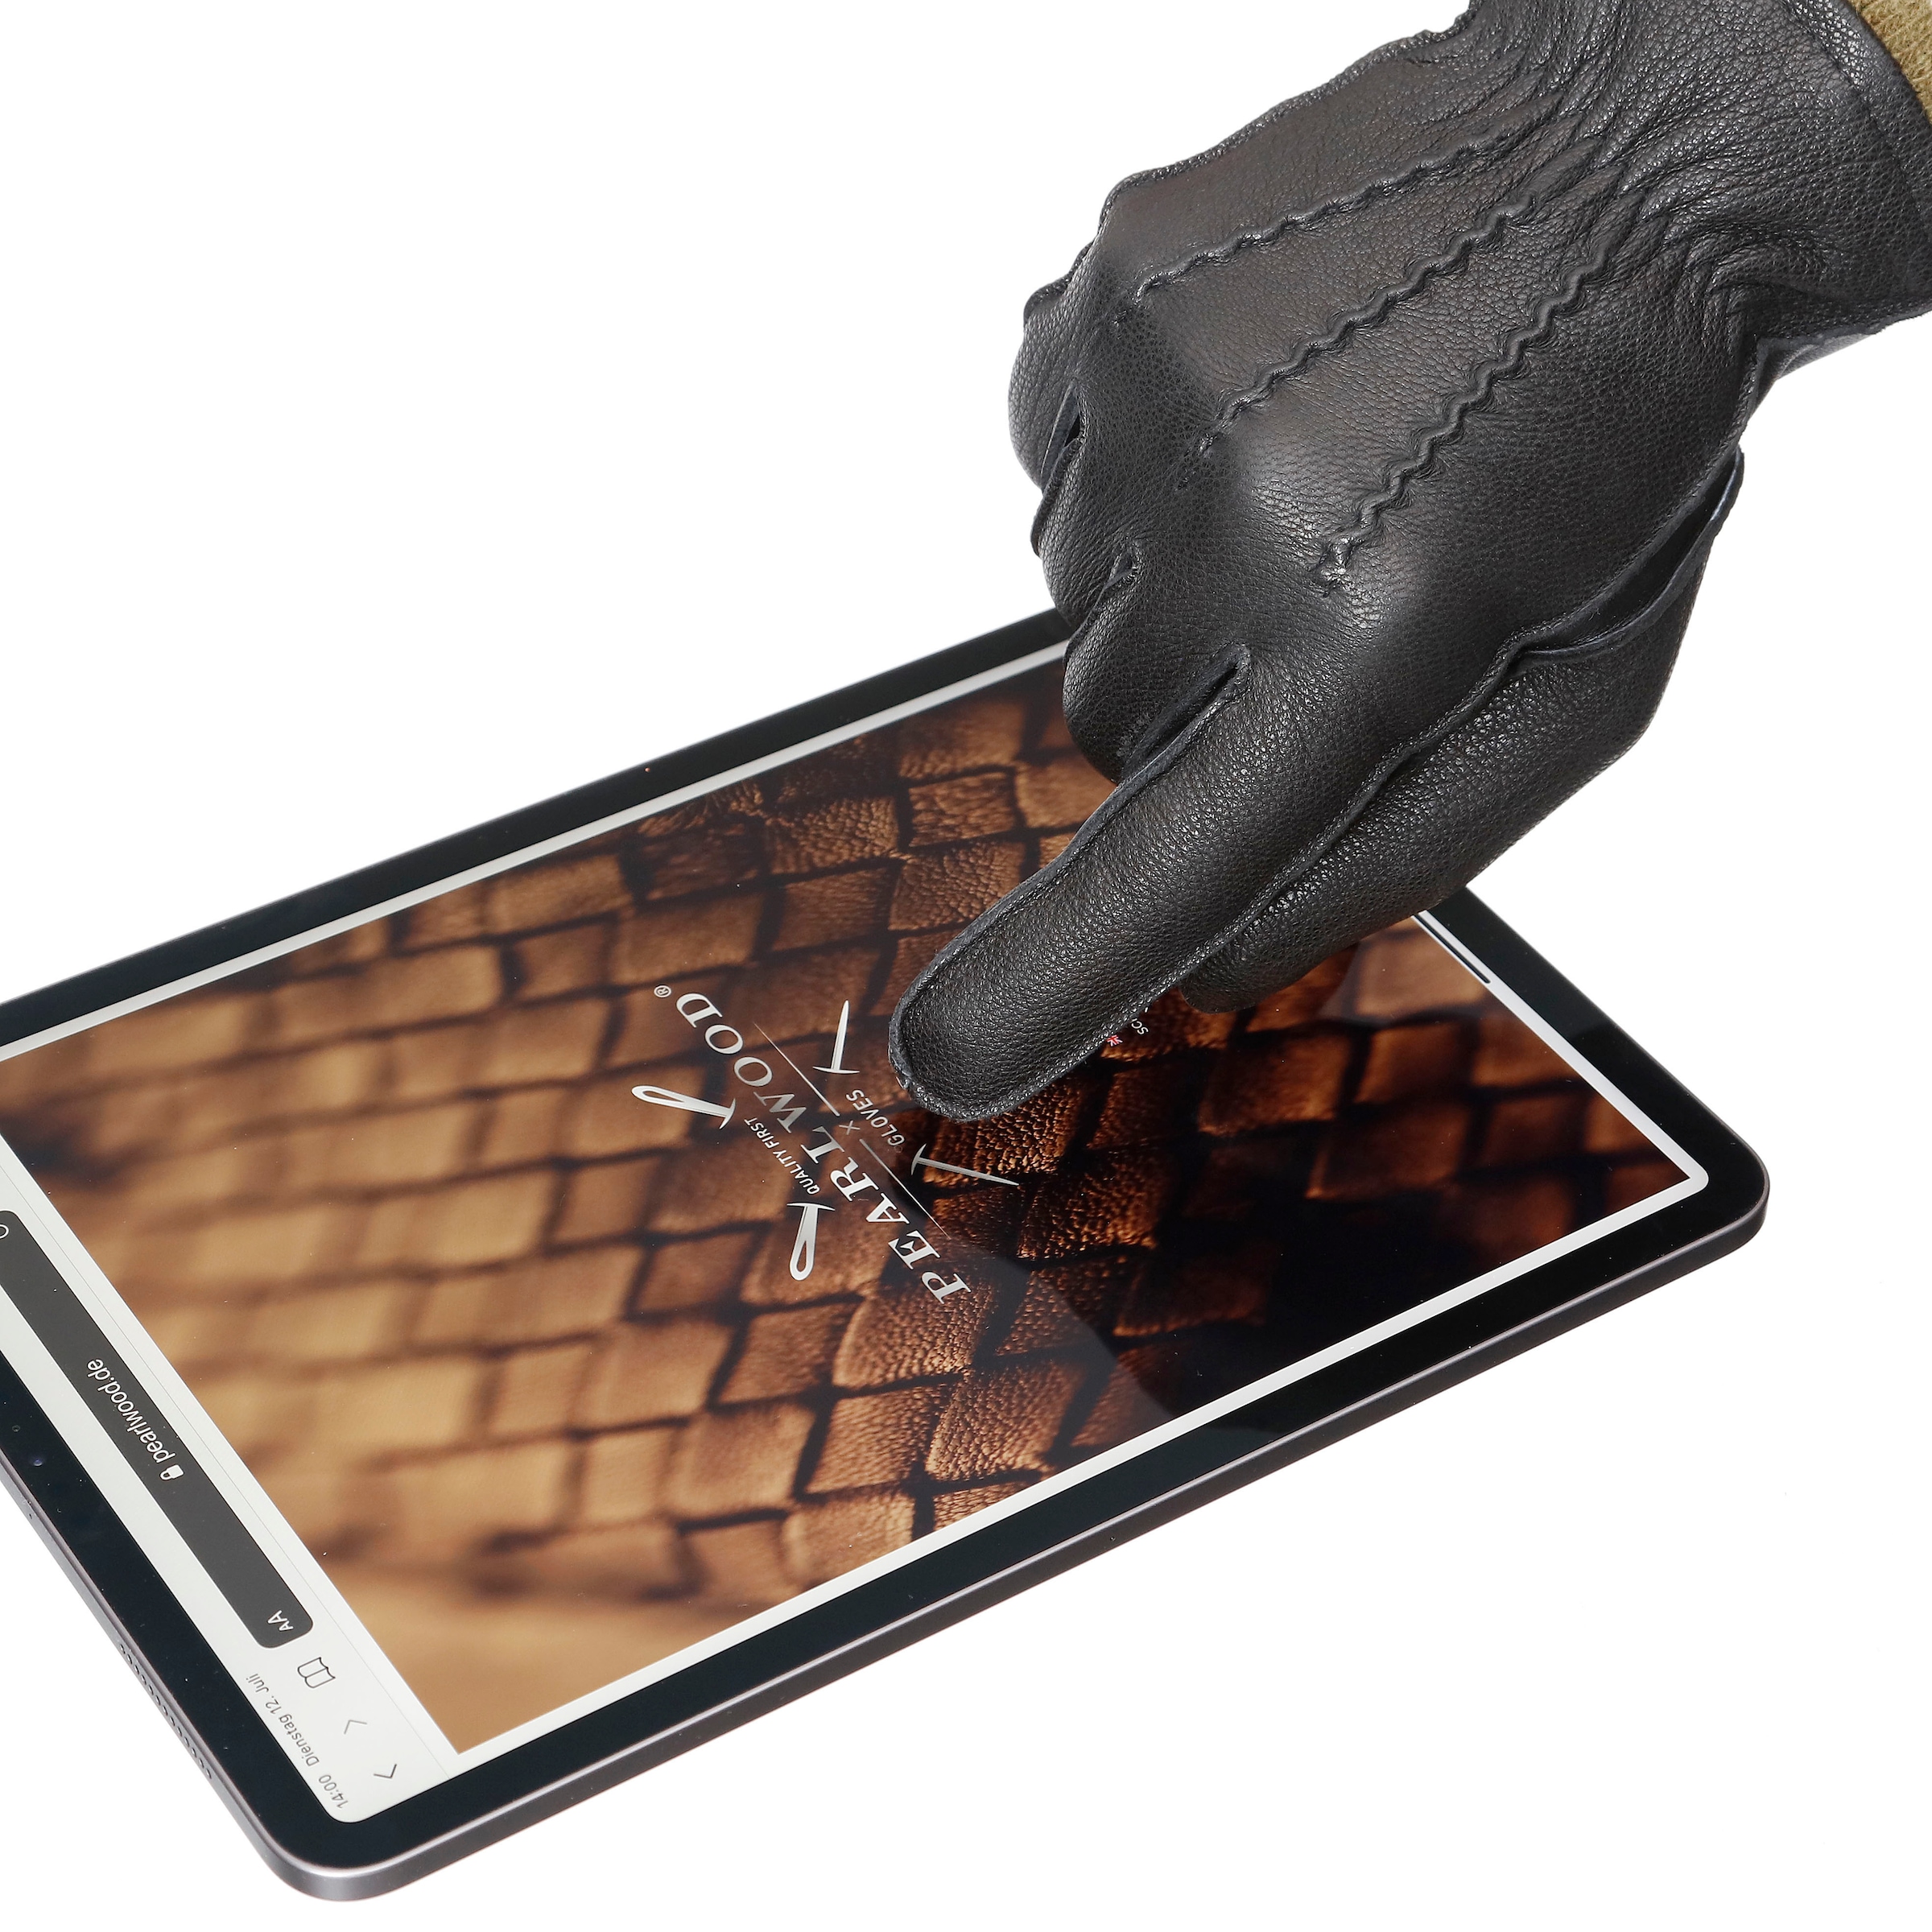 Finger online System Jelmoli-Versand kaufen »Miles«, PEARLWOOD Lederhandschuhe - | proofed Touchscreen 10